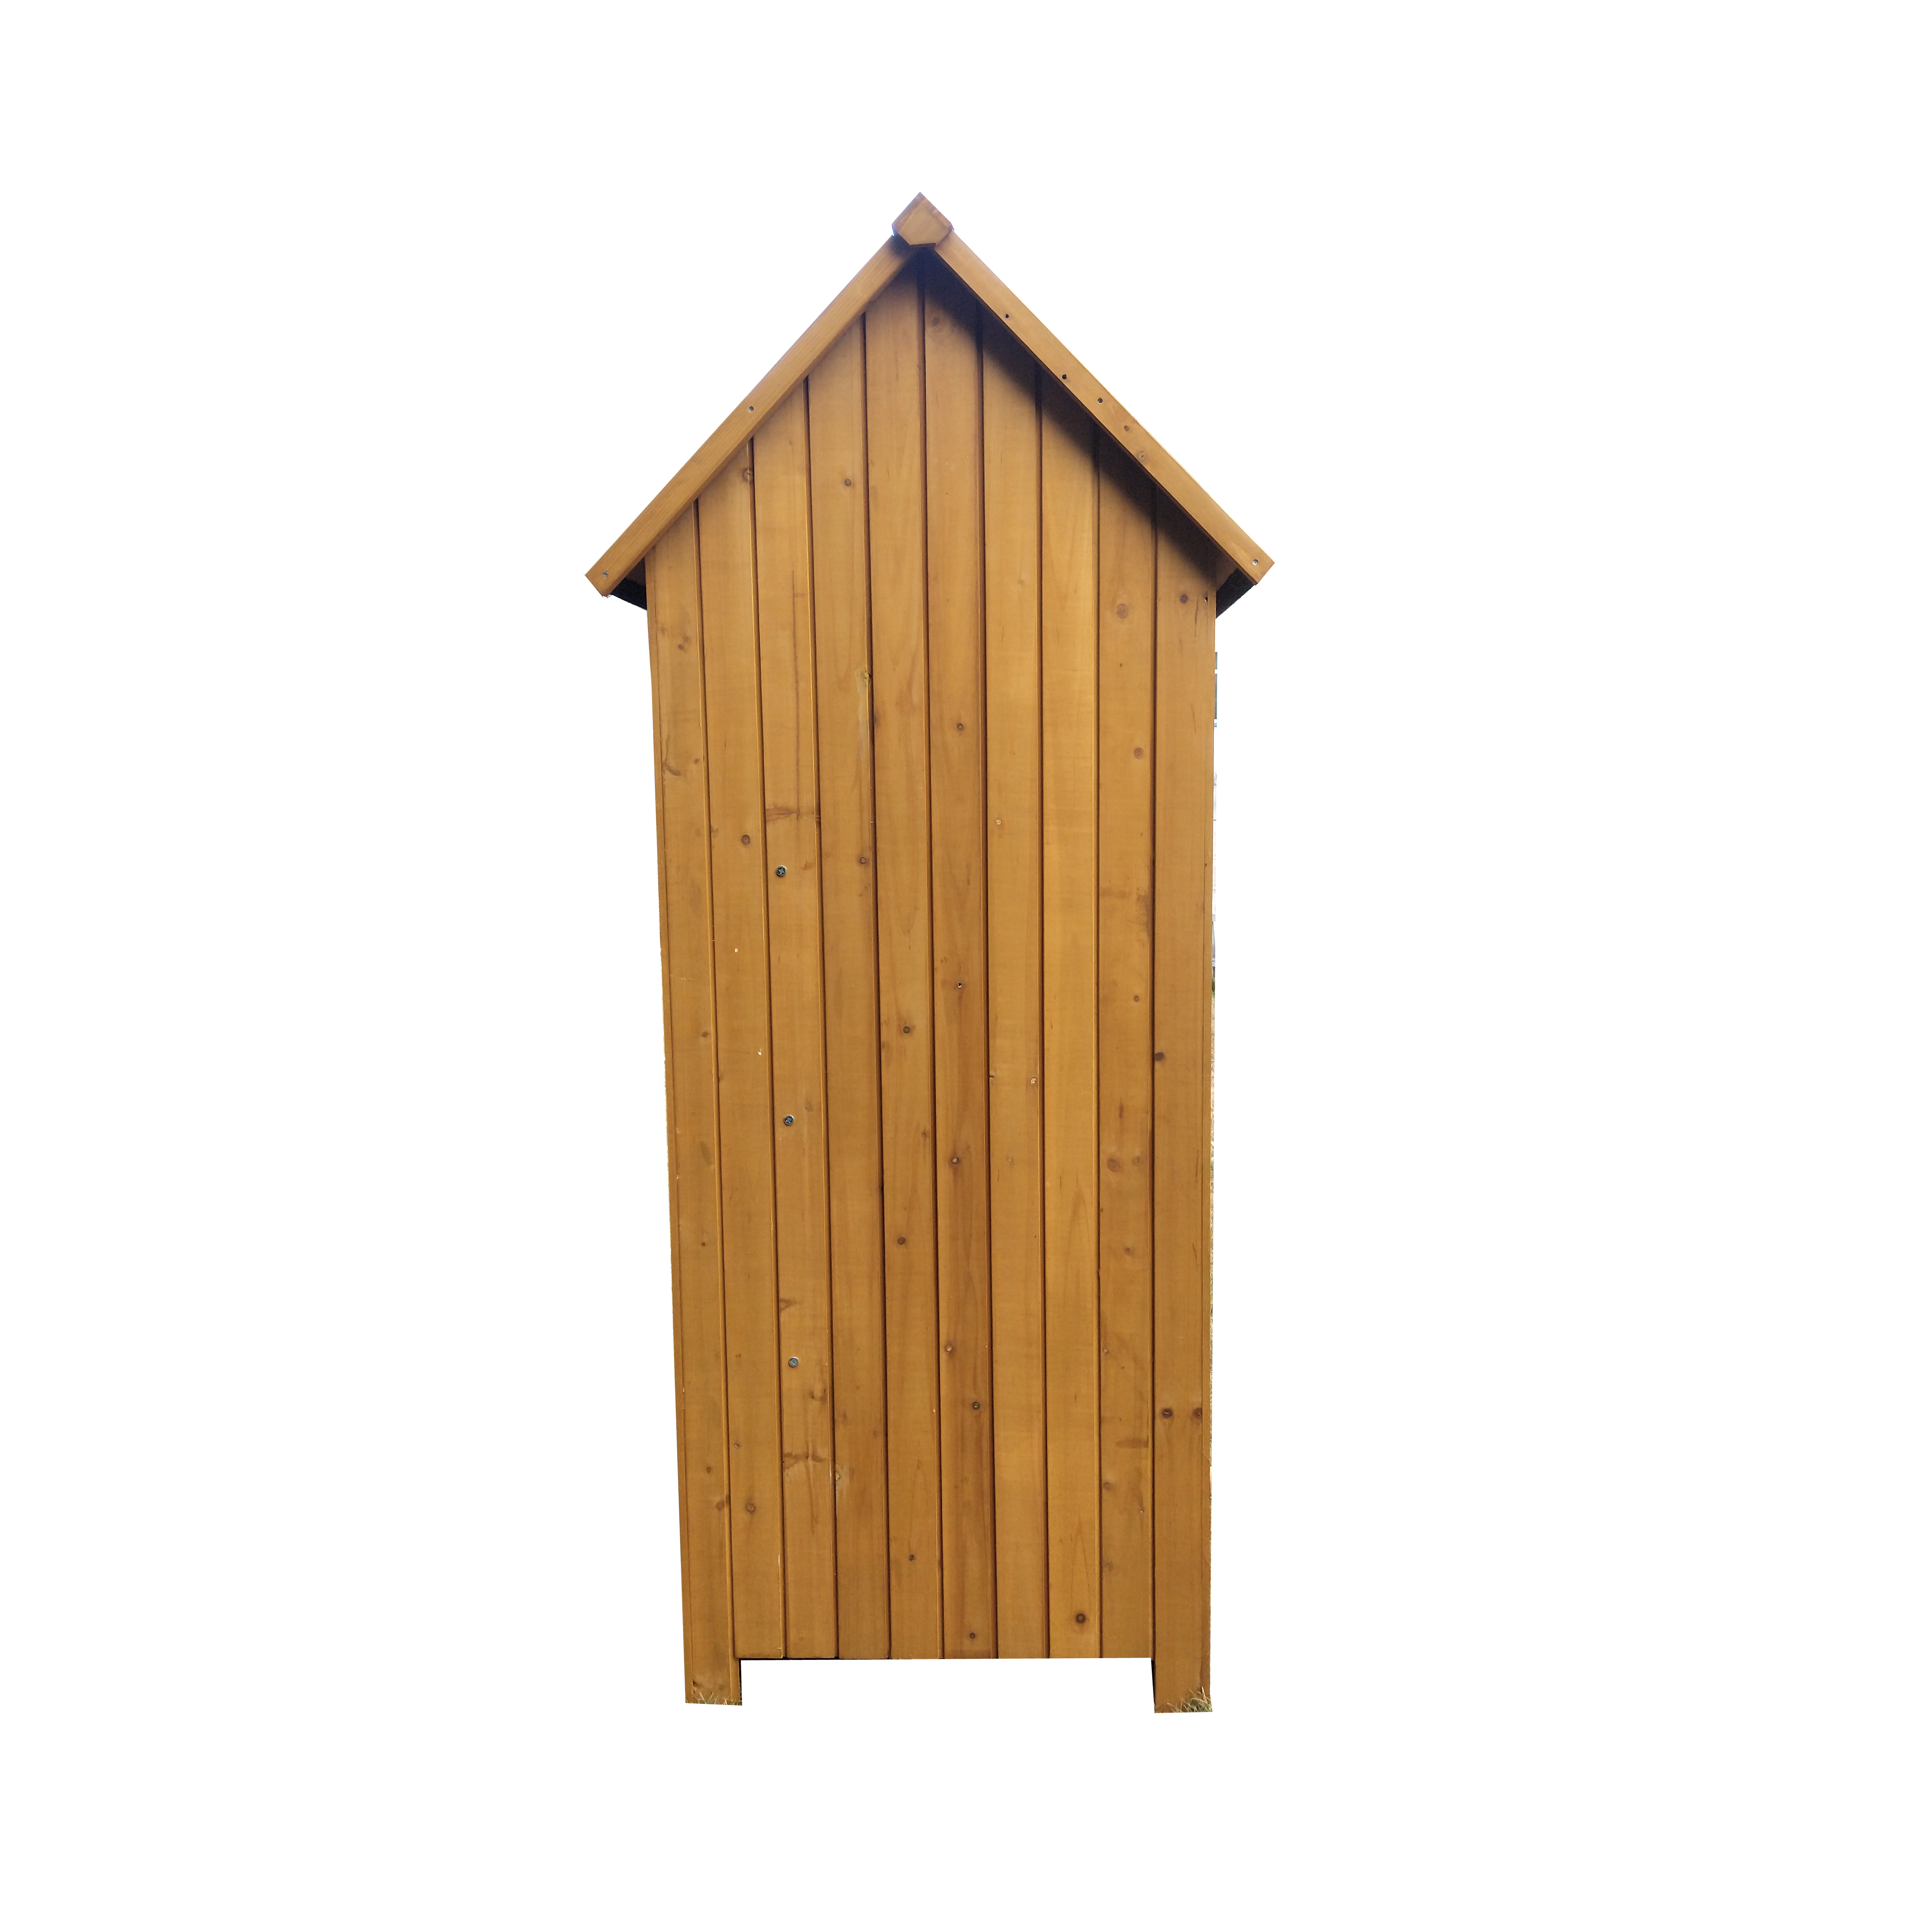 Outdoor tool Storage Shed Wooden Shutter Design Fir Wood Lockers log cabins for Garden Yard